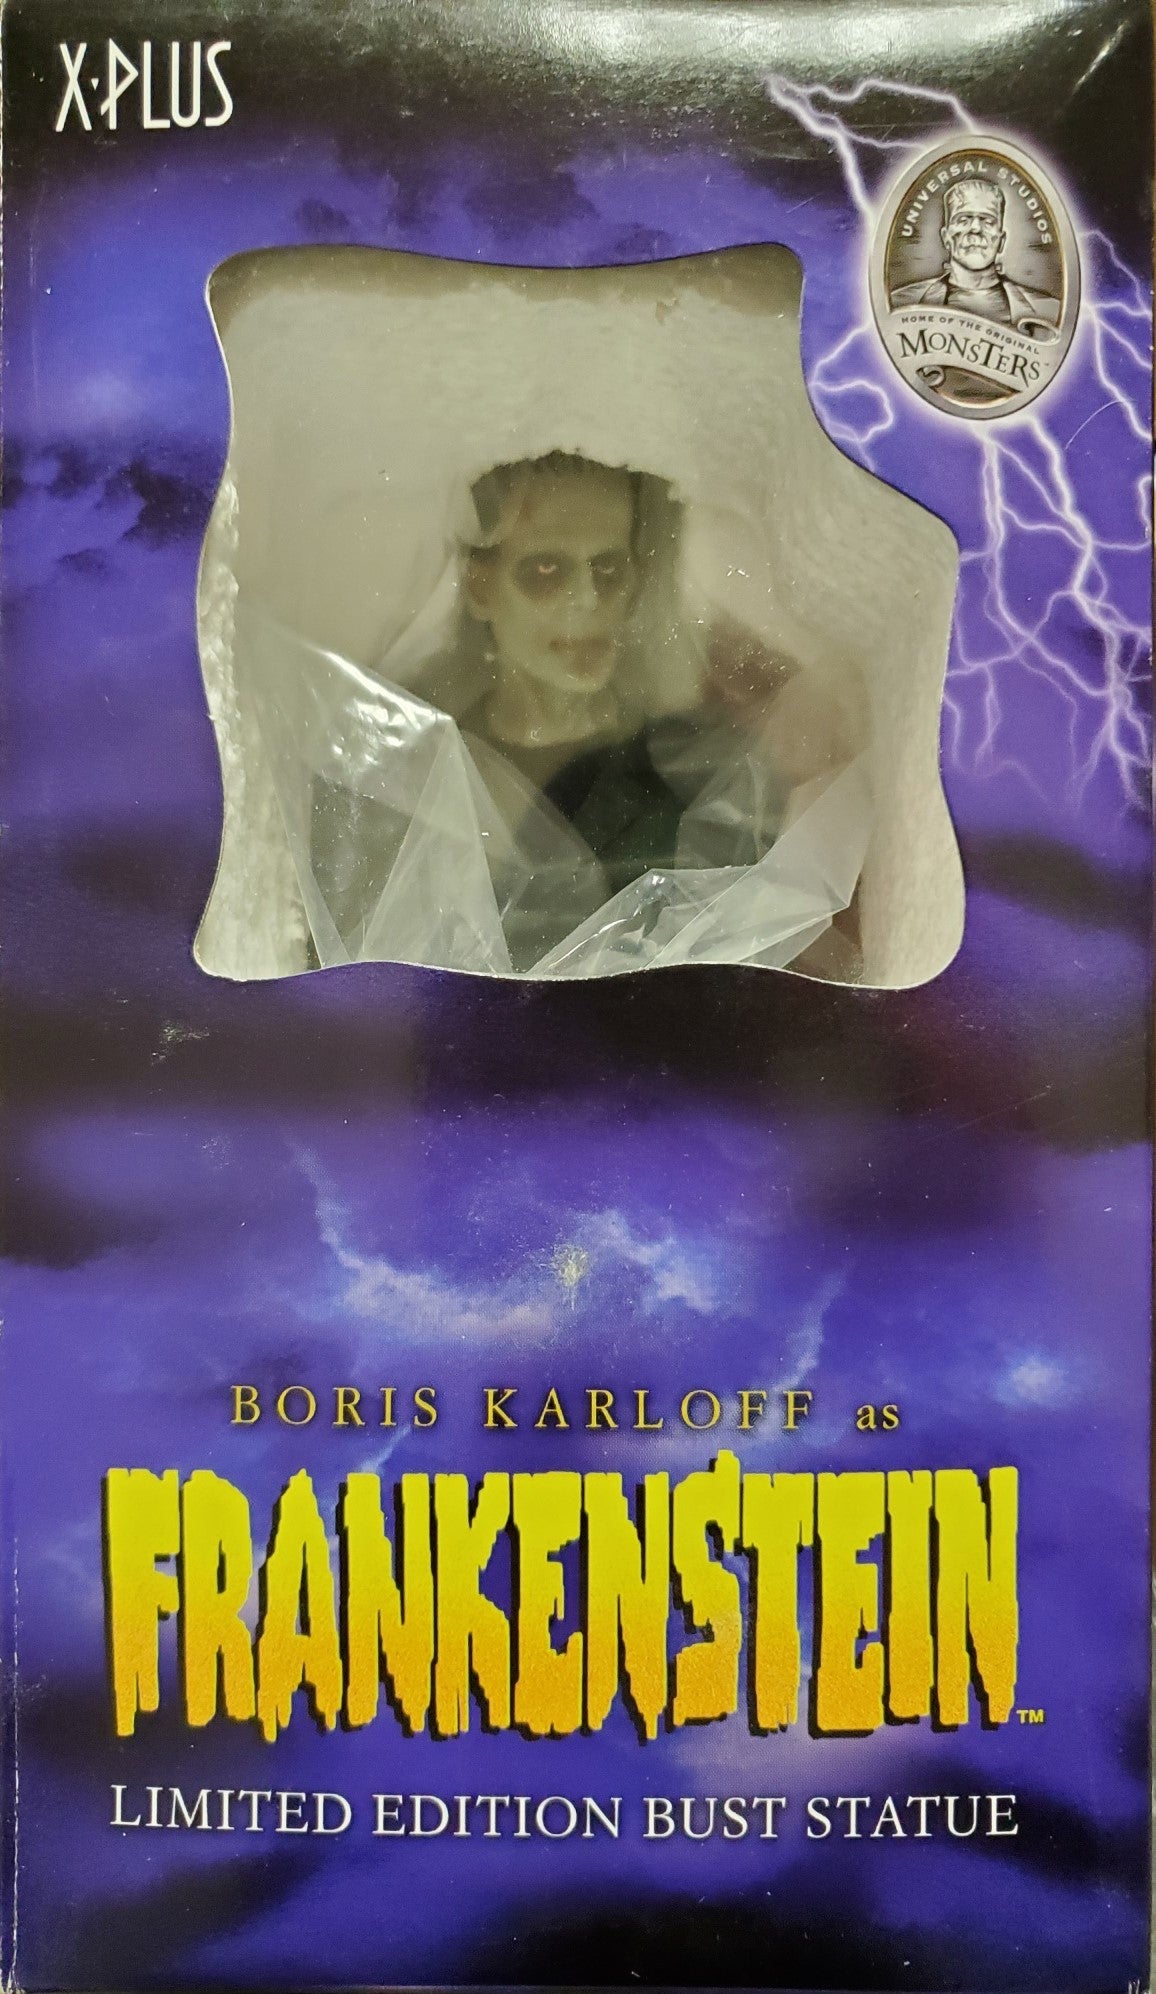 Boris Karloff as Frankenstein Limited Edition bust